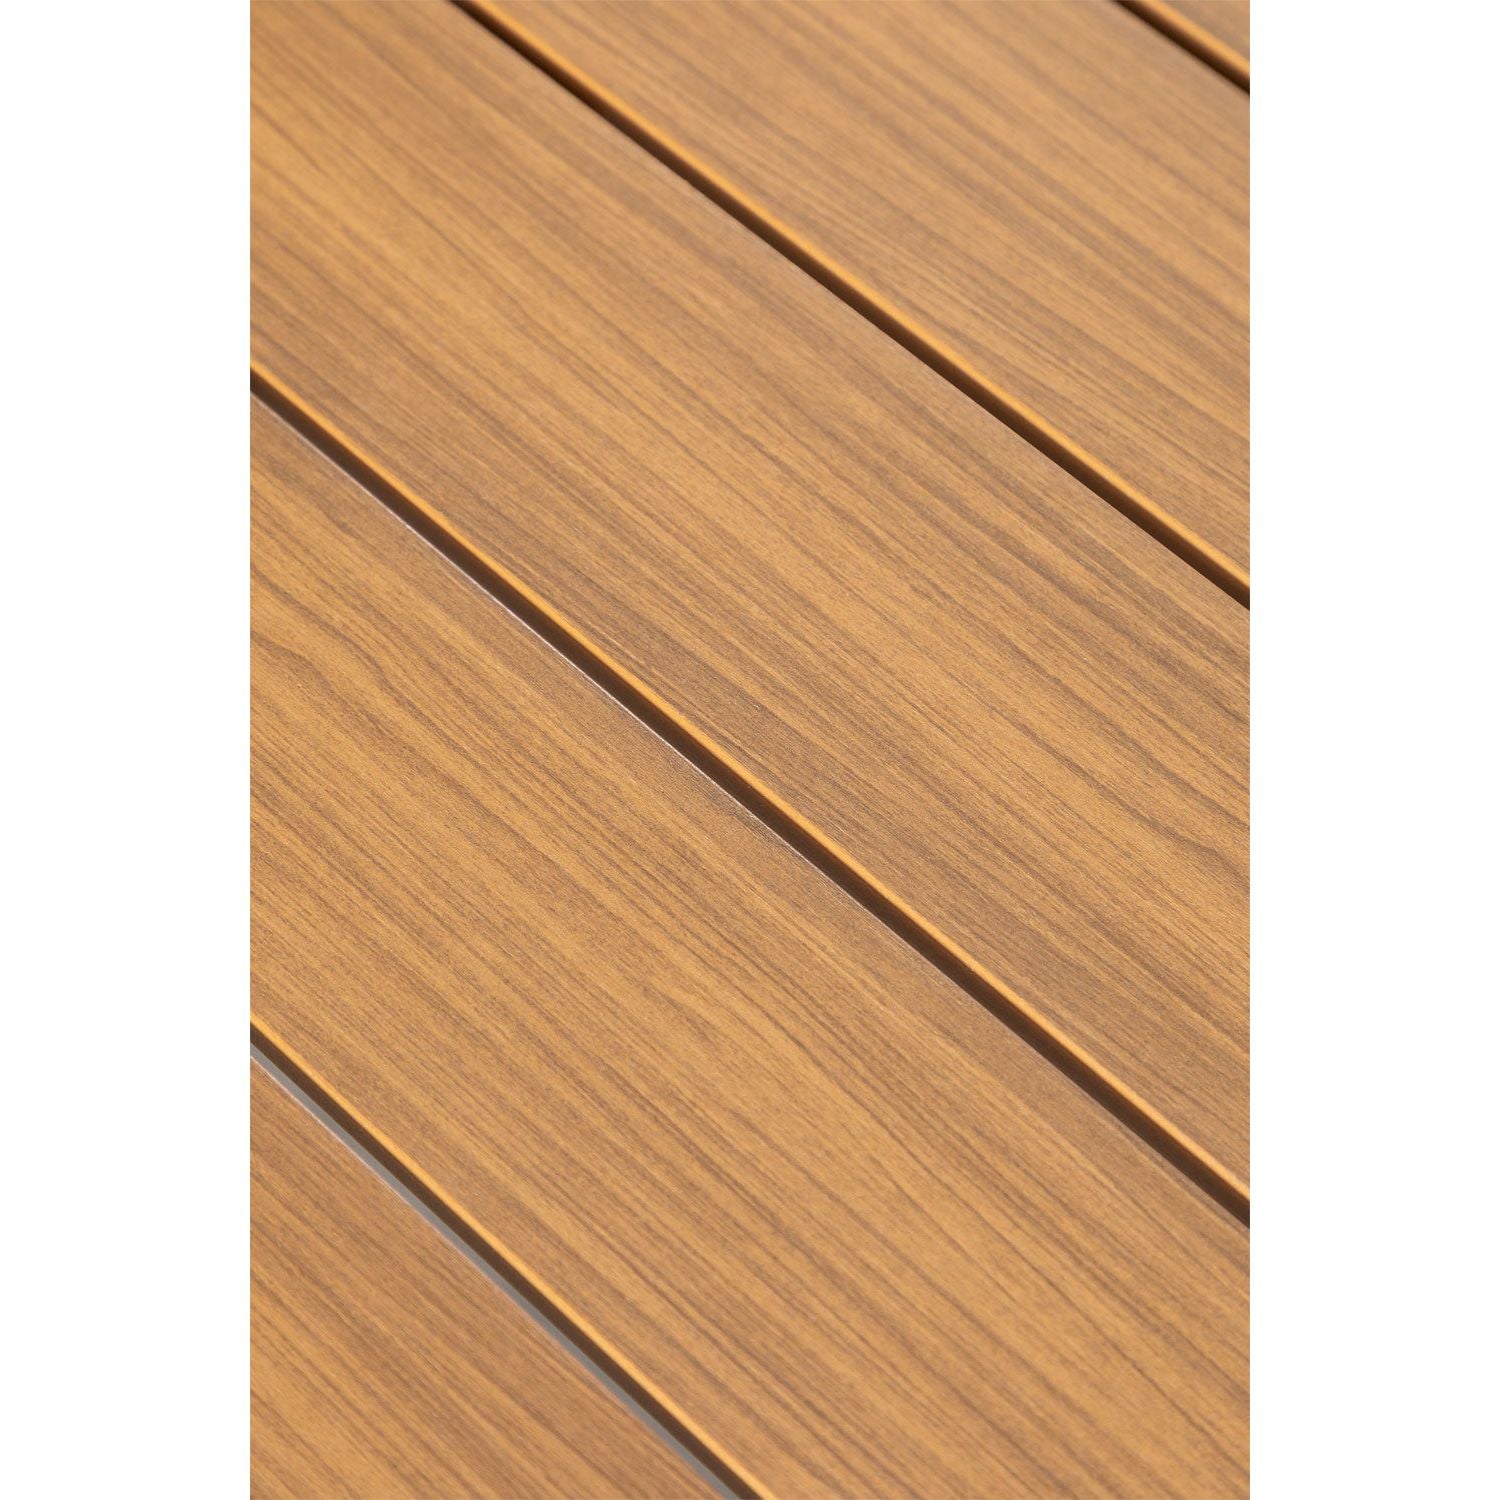 Lauko stalas SAURA, prailginamas, aliuminis, antracito spalva, 150-197x90 cm